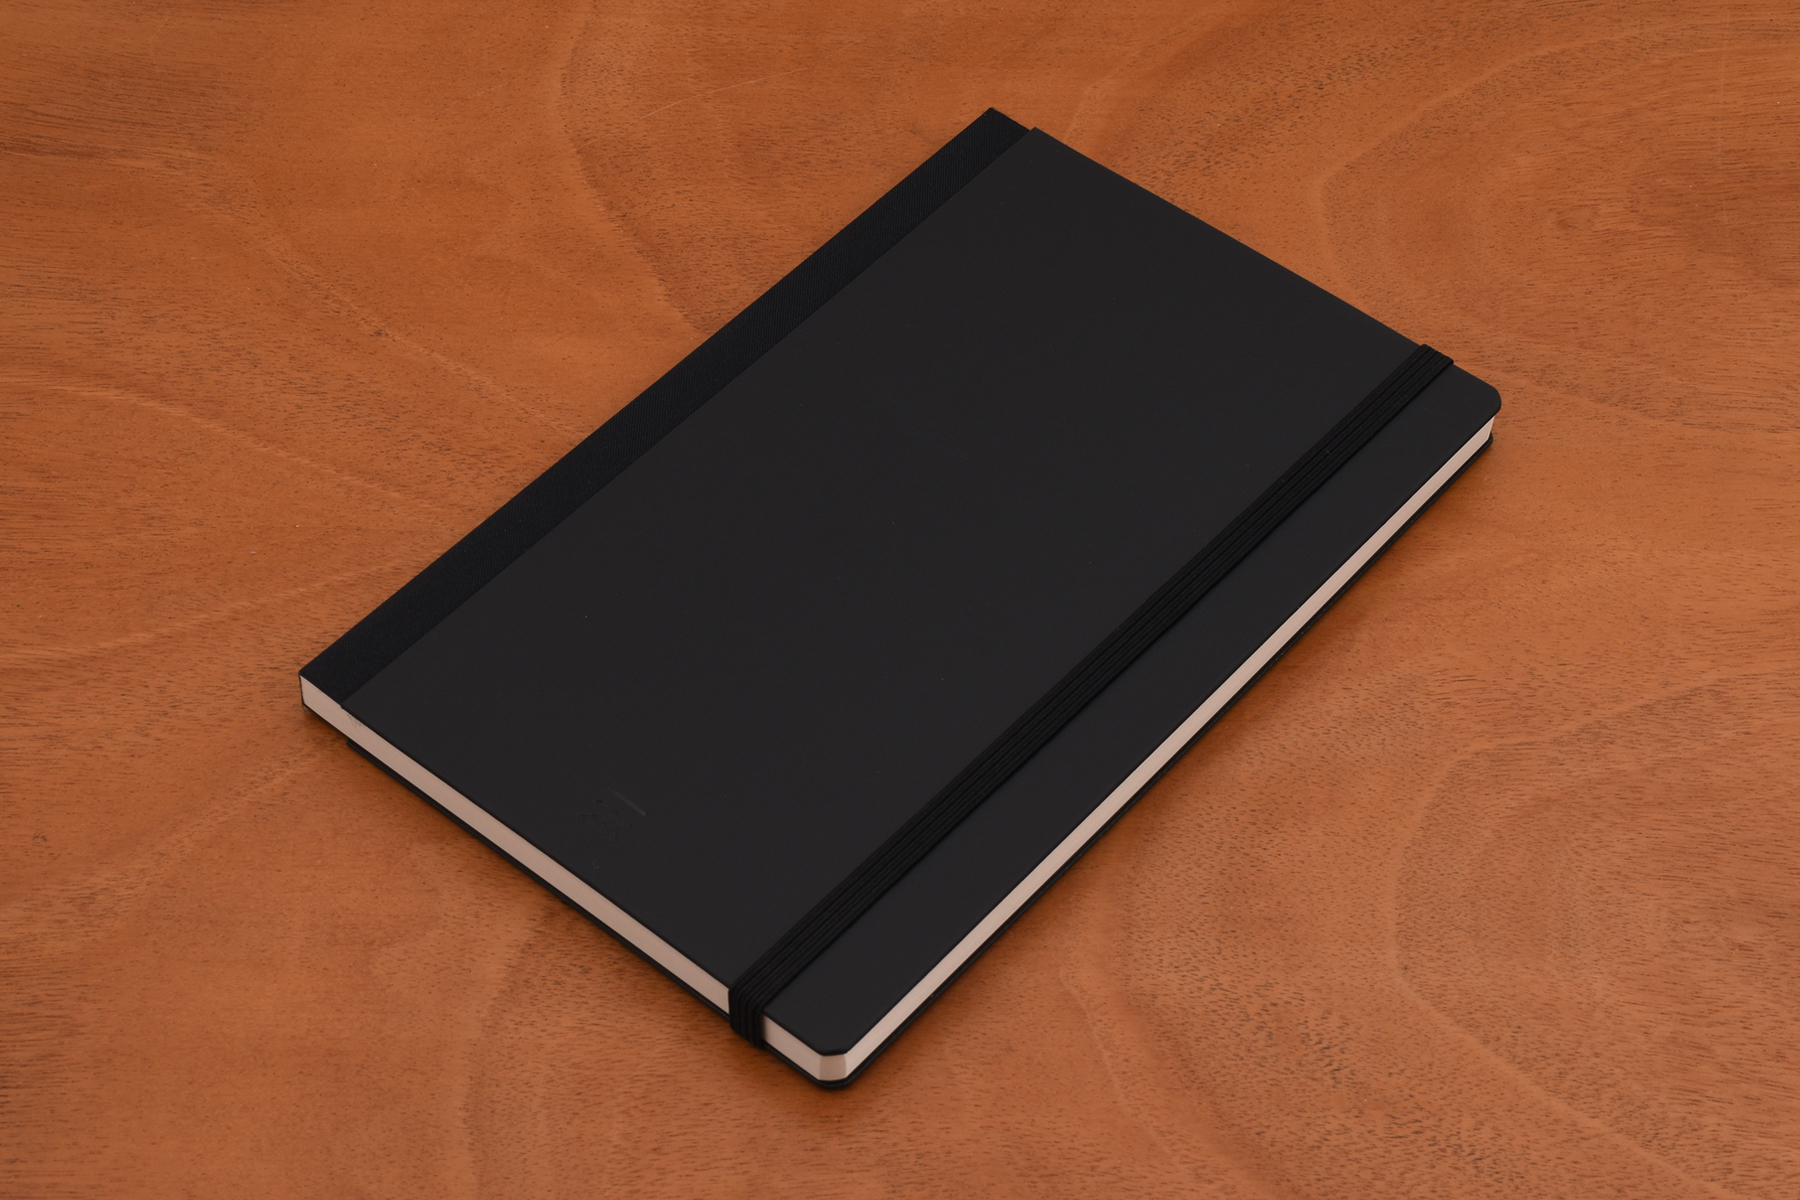 Nothing beats a classic black notebook like the Kokuyo PERPANEP Premium.